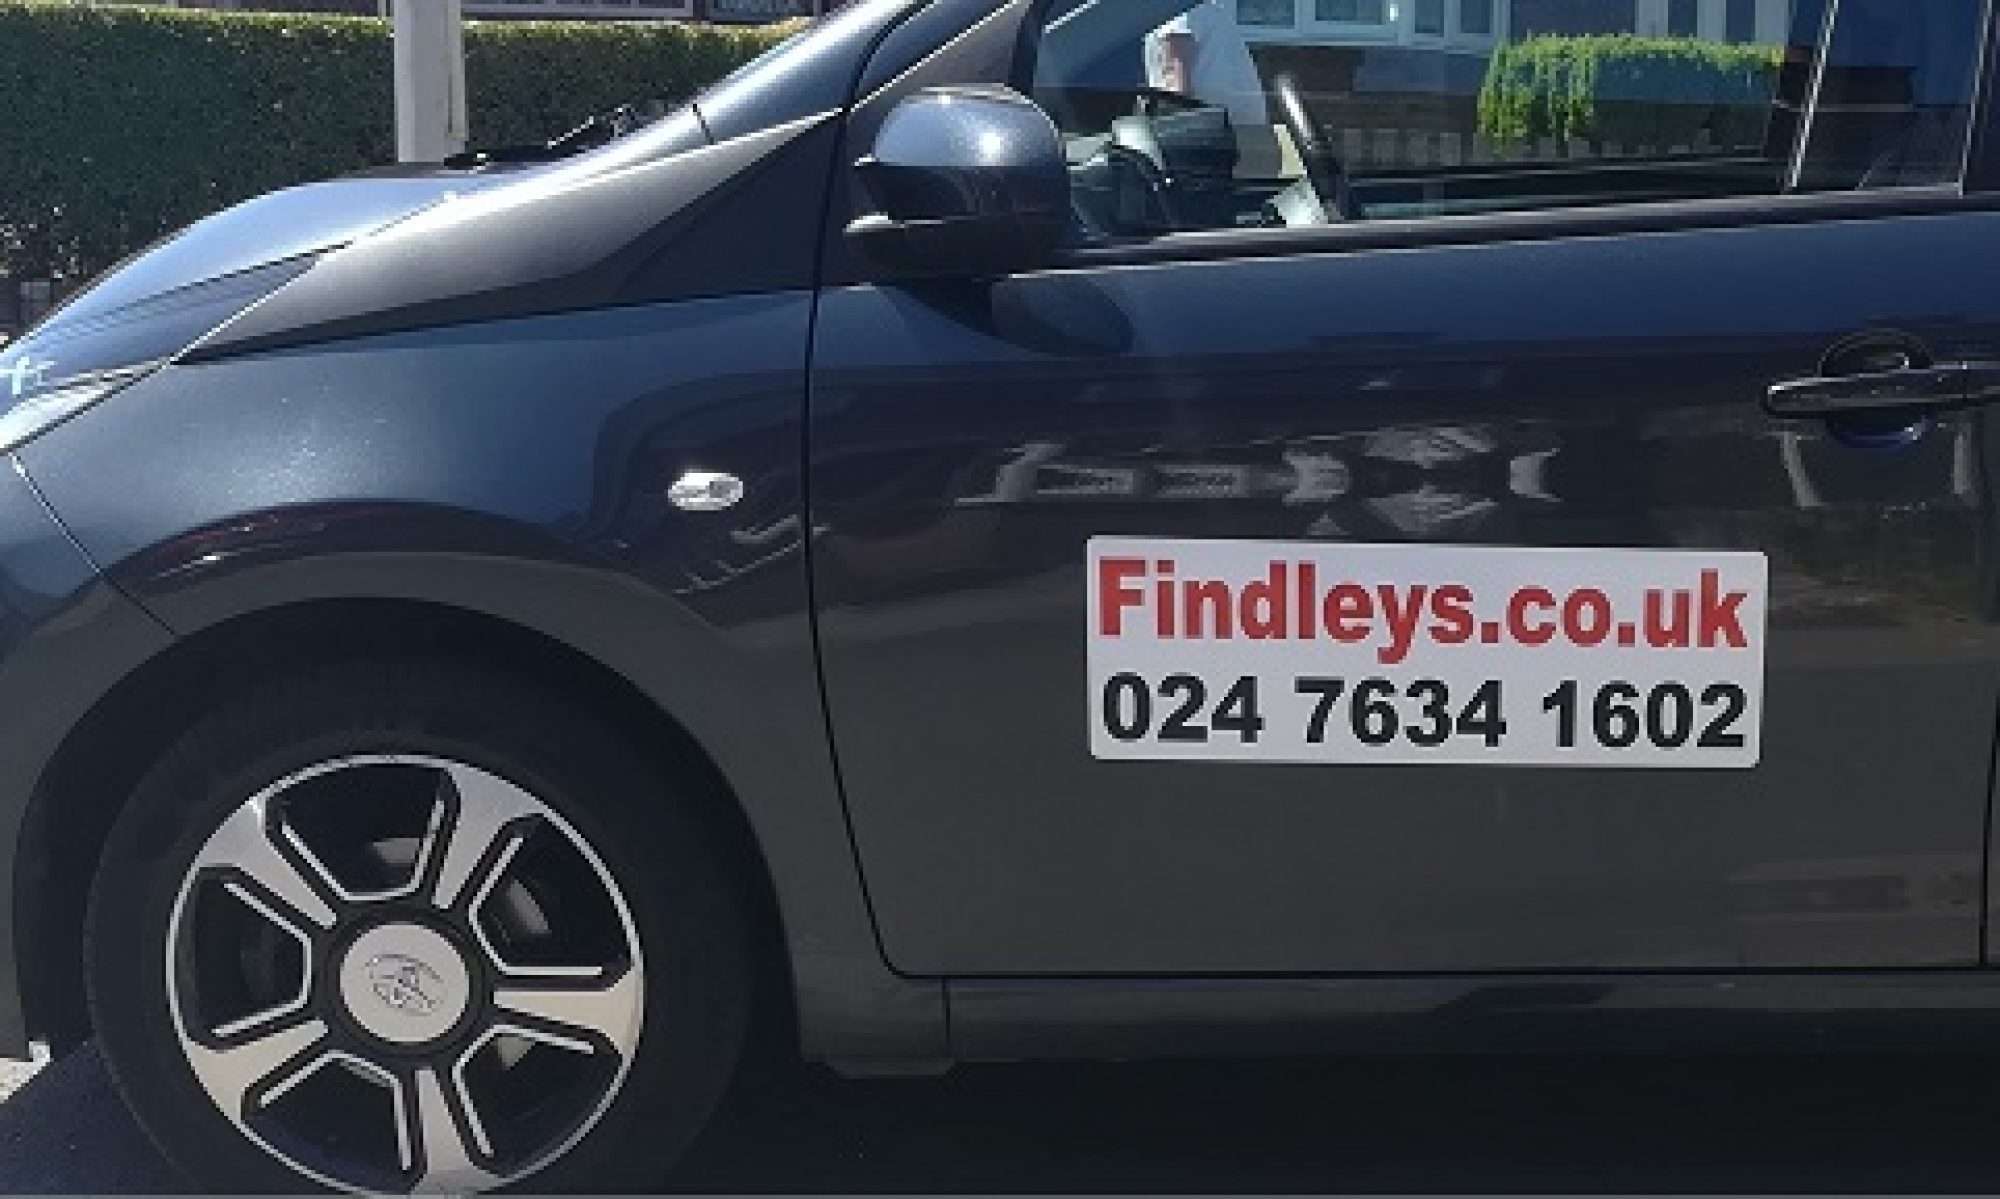 Findleys Driving School Blog